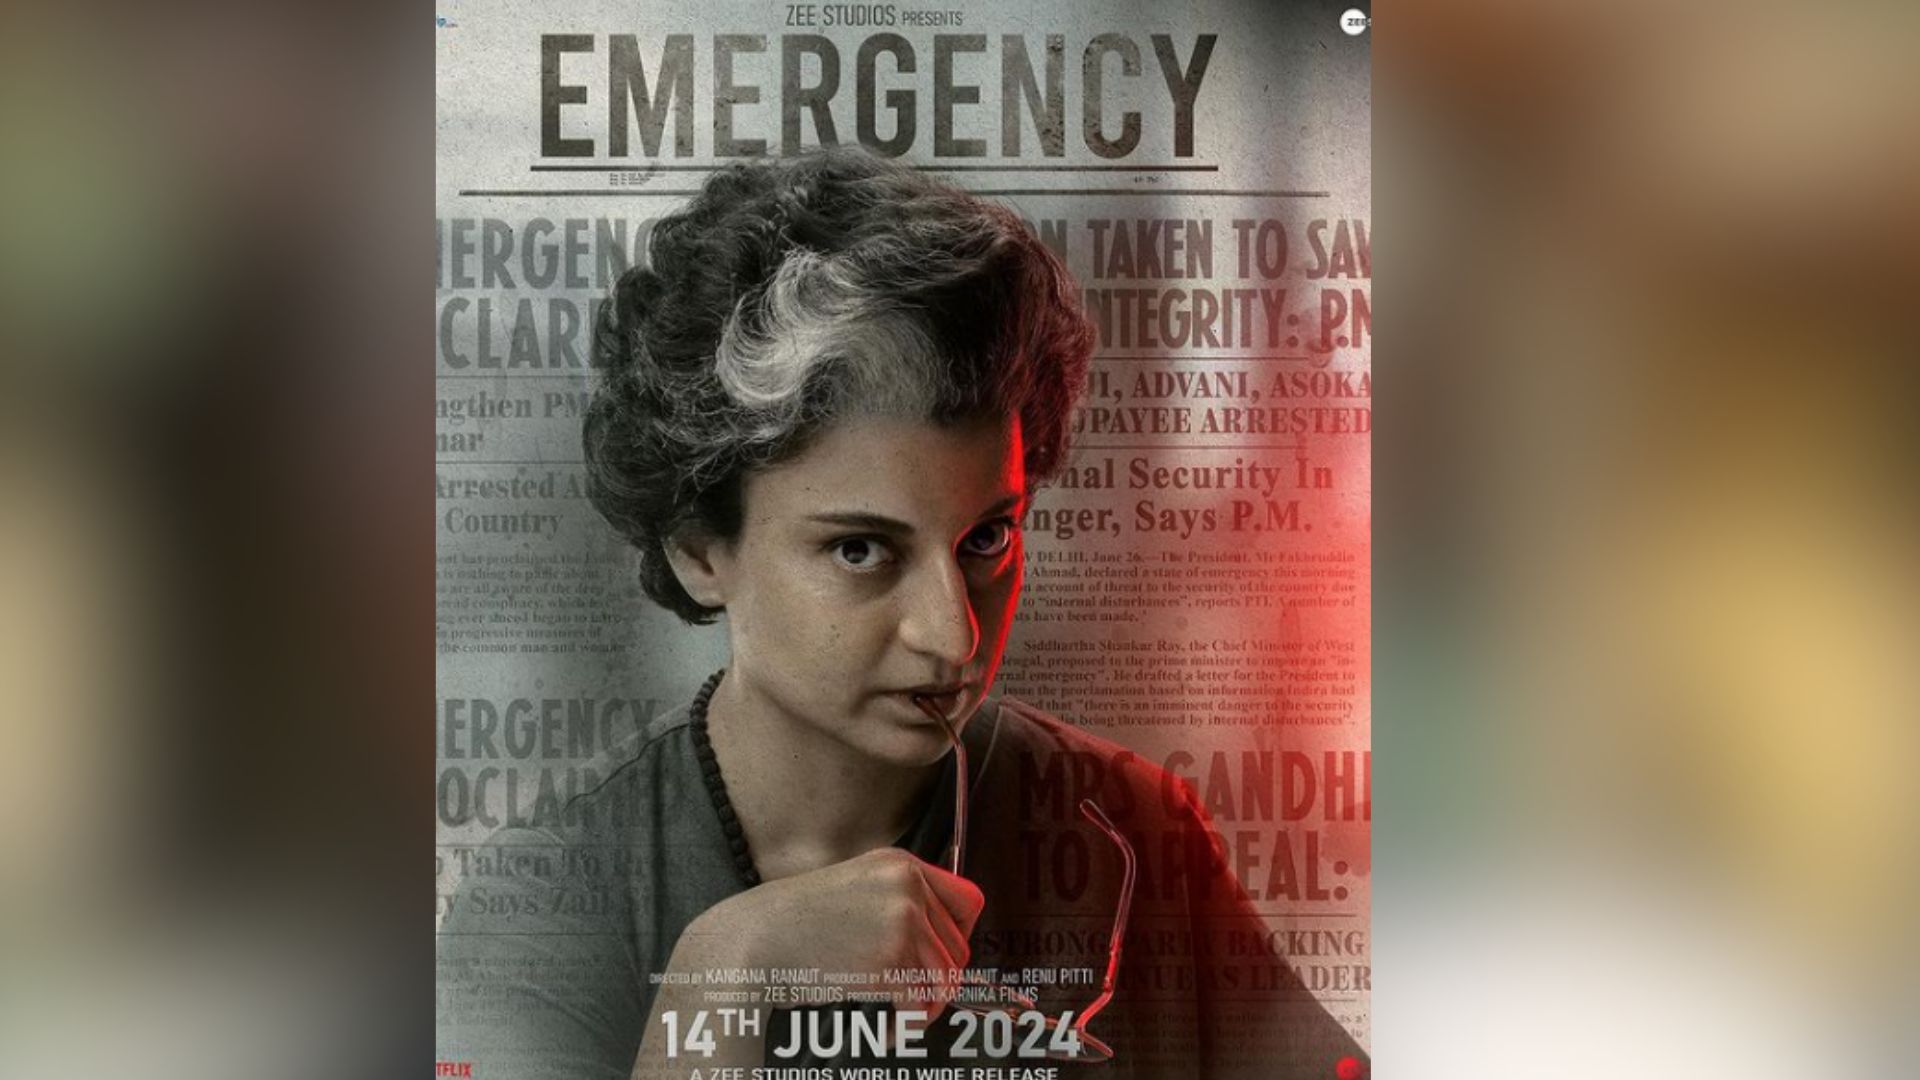 Kangana Ranaut’s Film “Emergency” on Indira Gandhi Sets Release Date